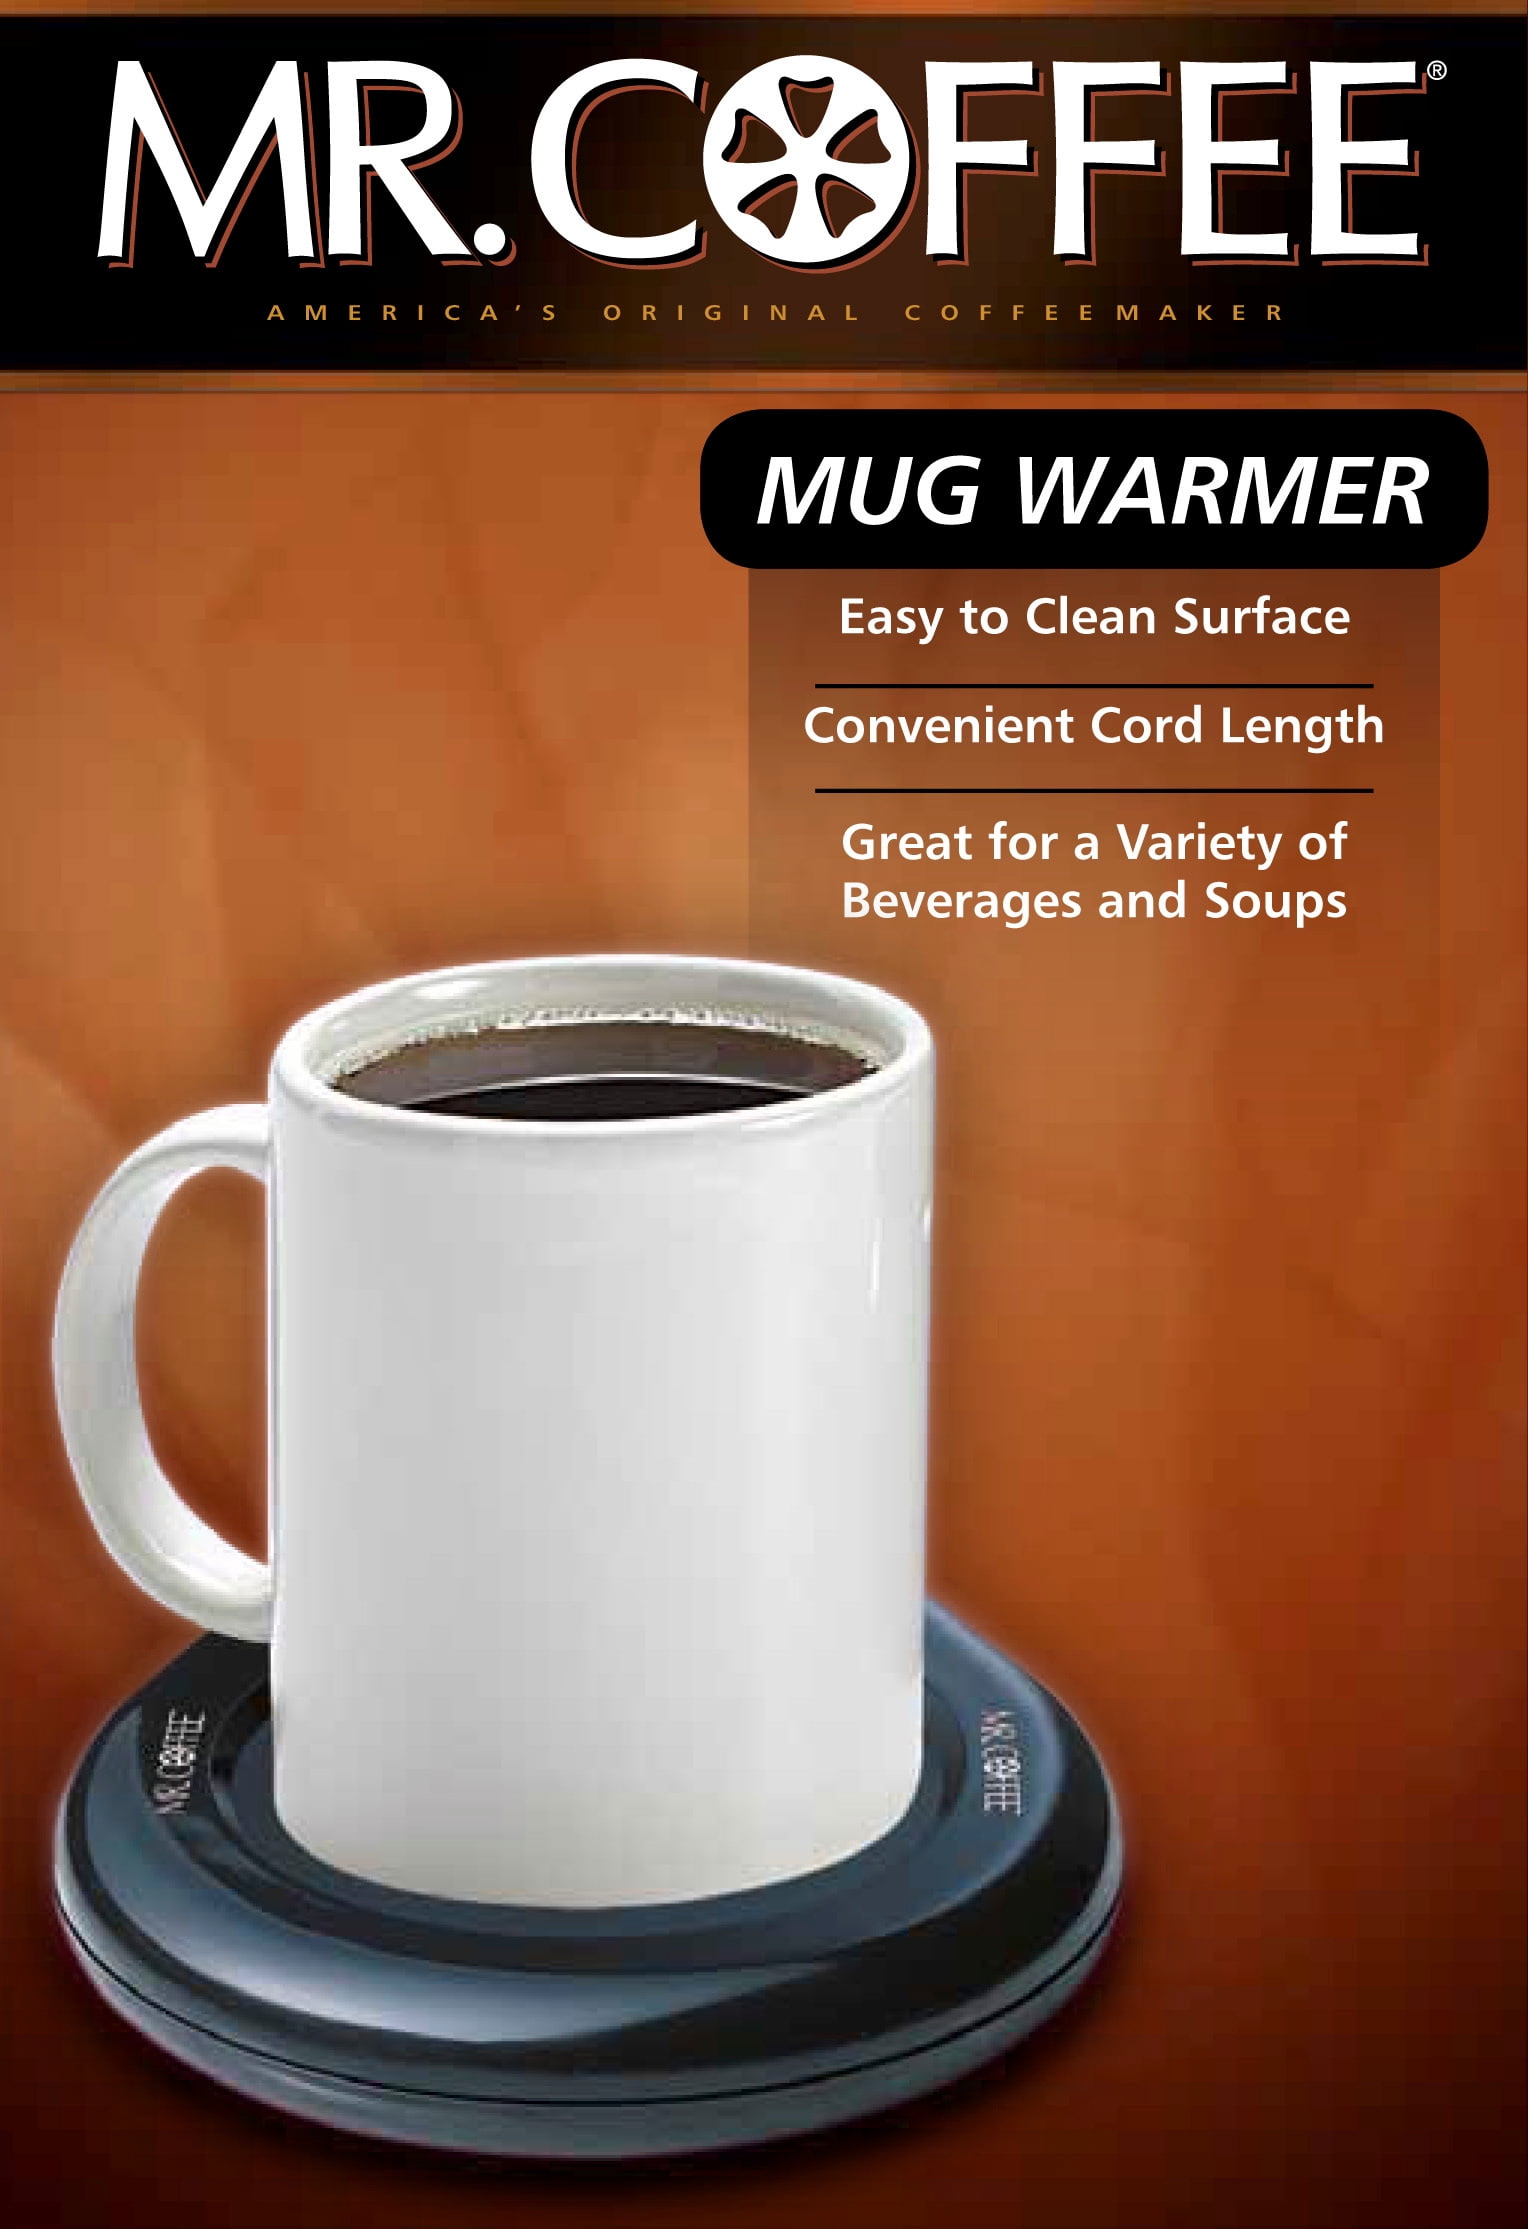 Mr. Coffee Mug Warmer Review